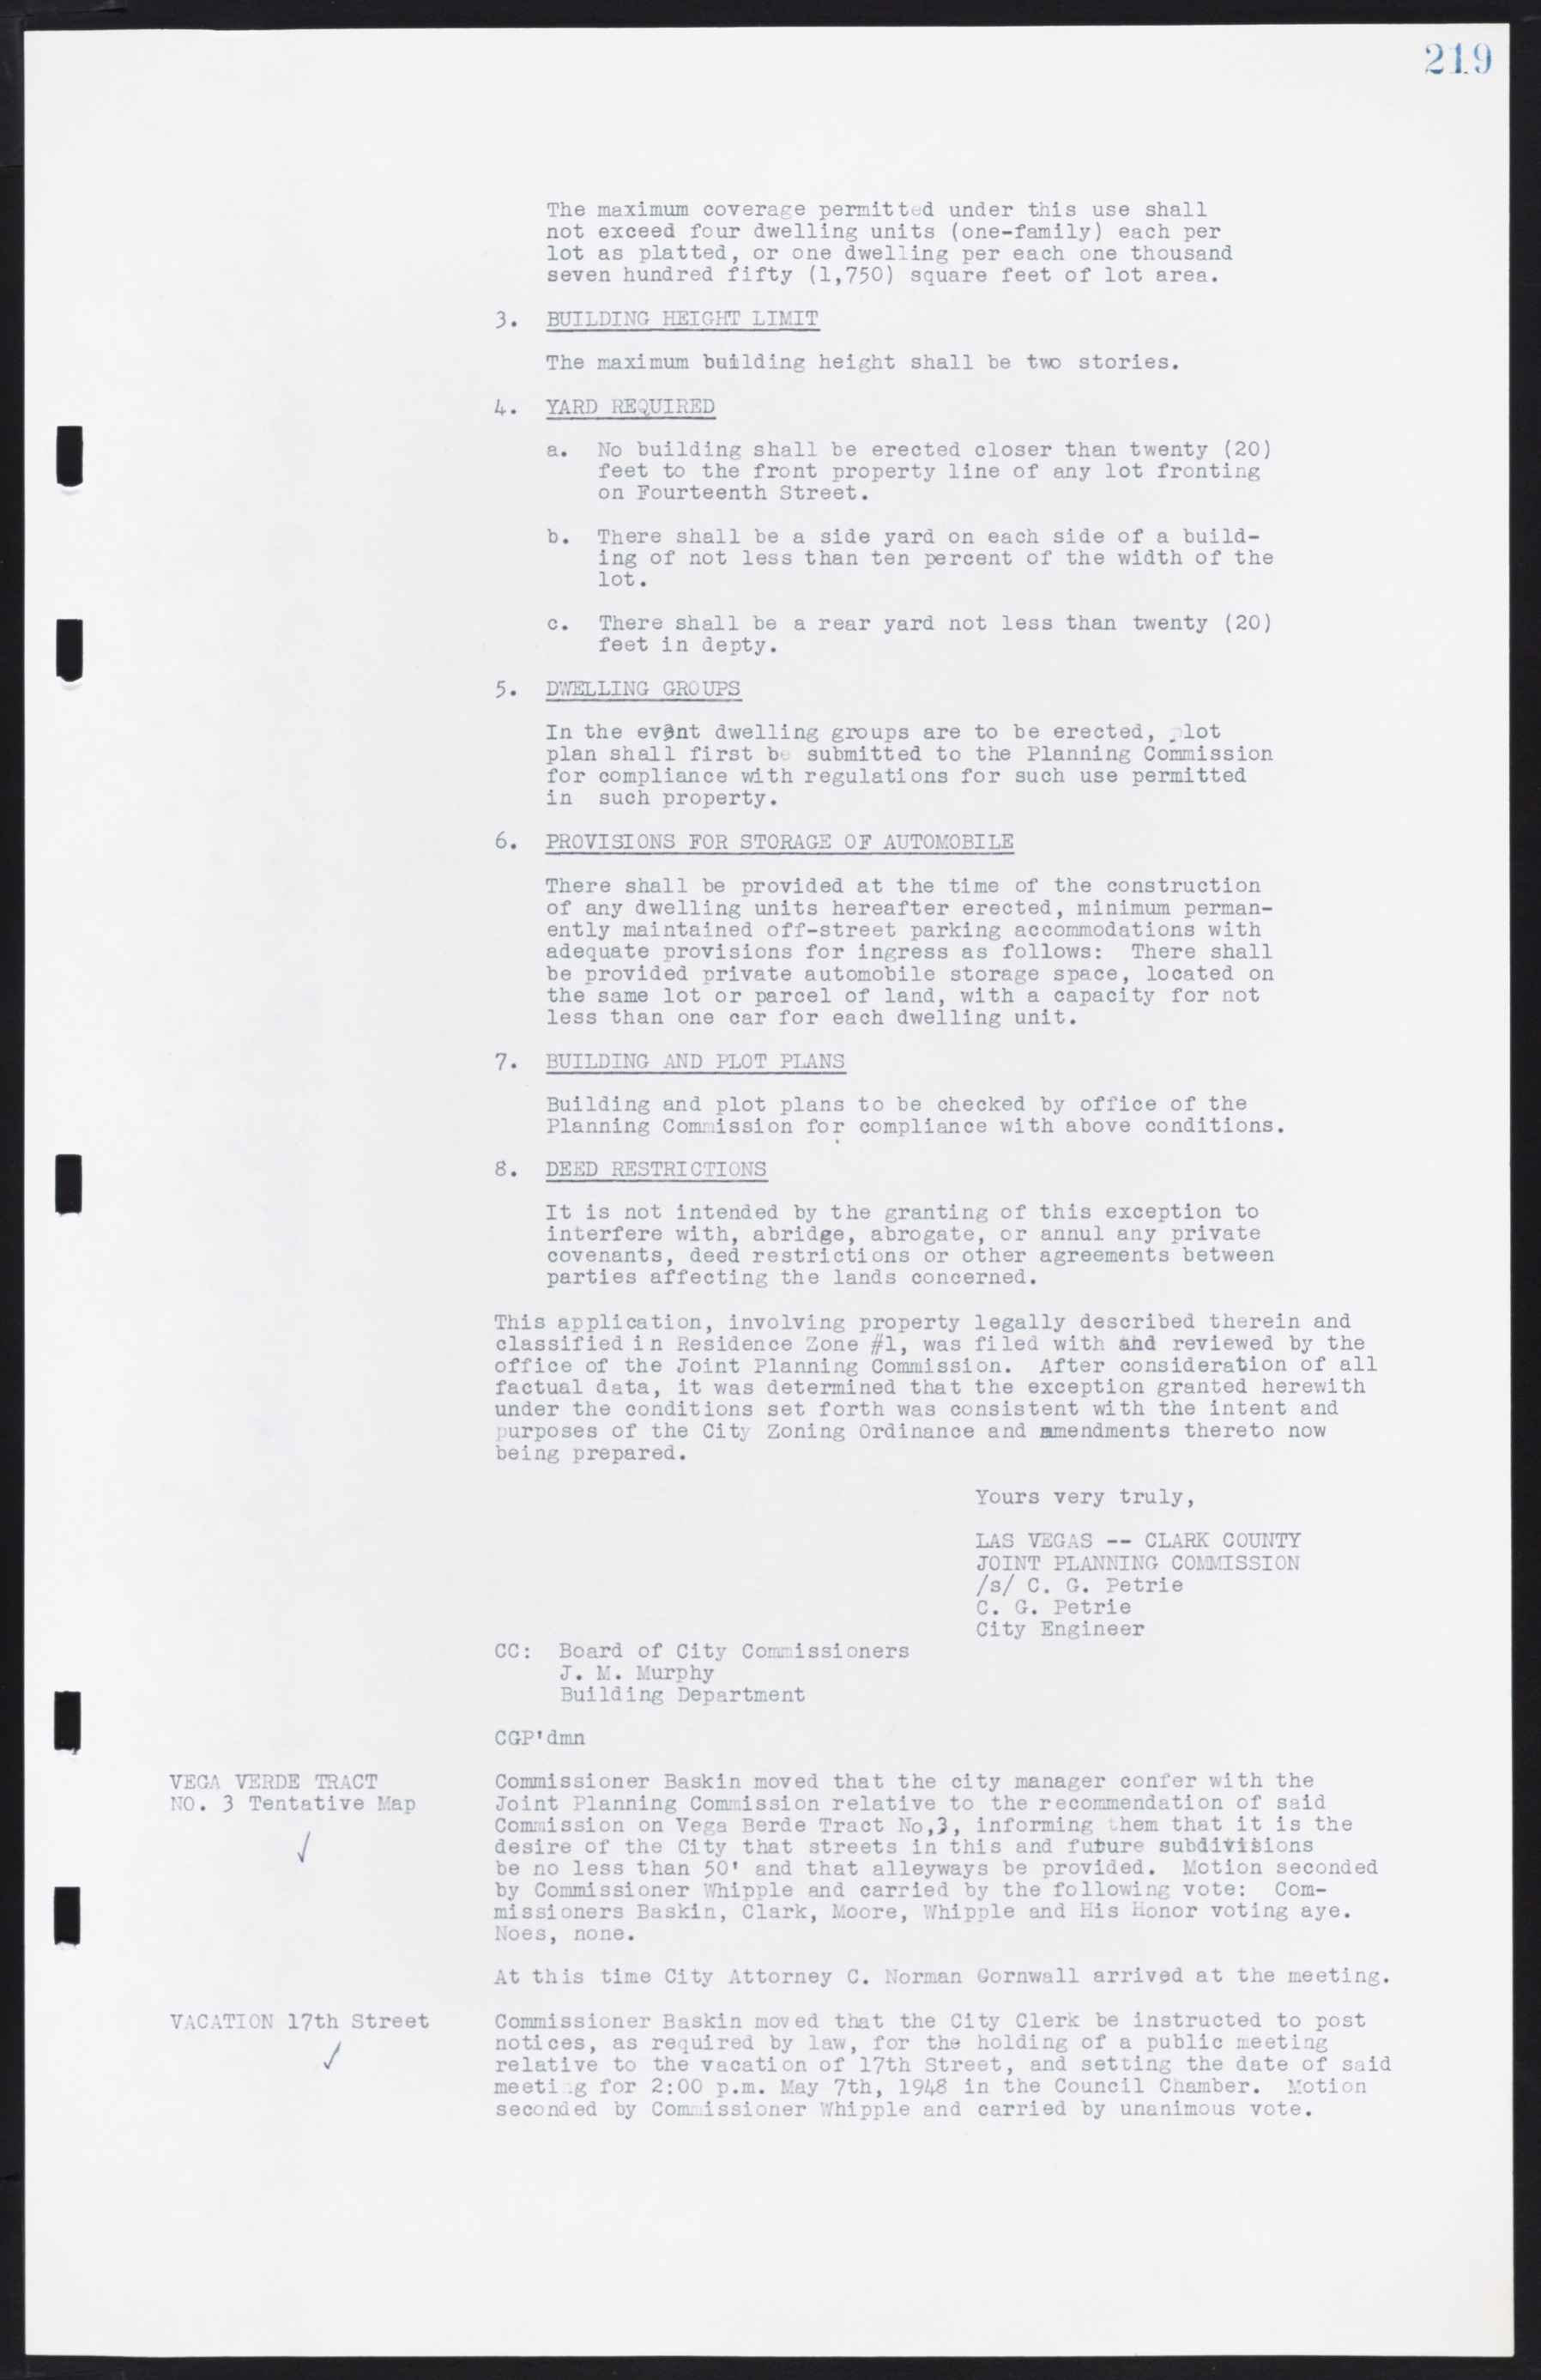 Las Vegas City Commission Minutes, January 7, 1947 to October 26, 1949, lvc000006-241